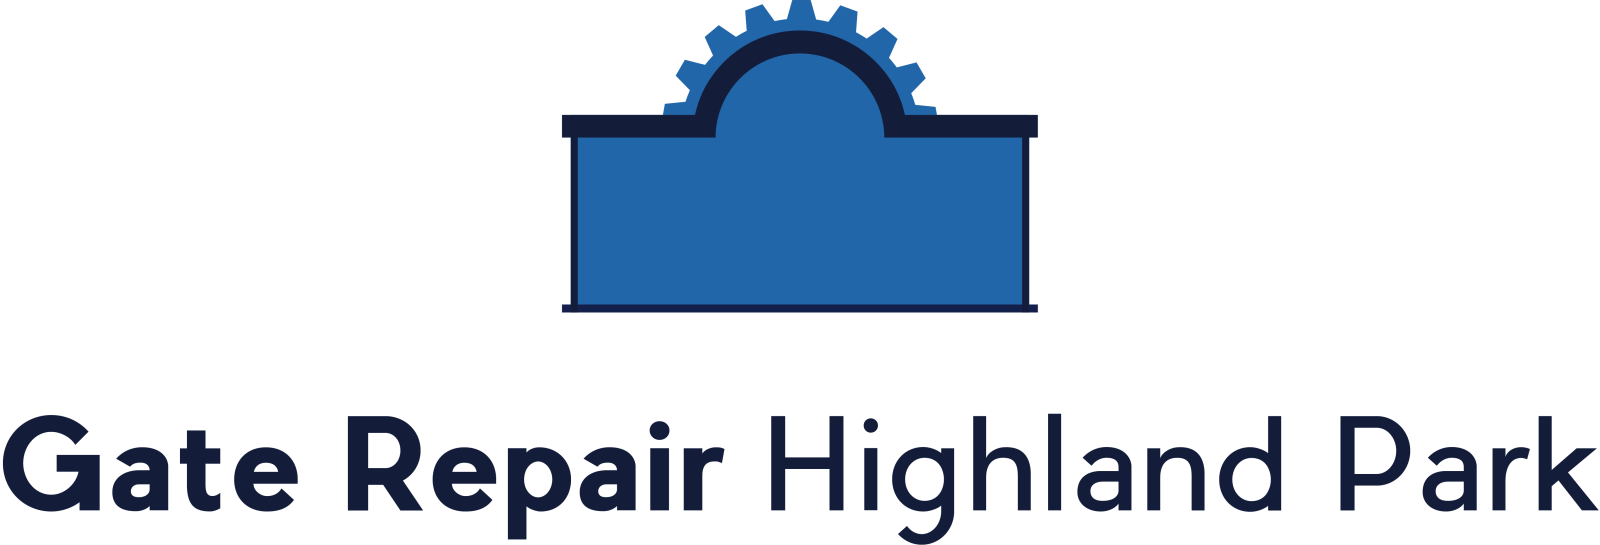 Gate Repair Highland Park Logo